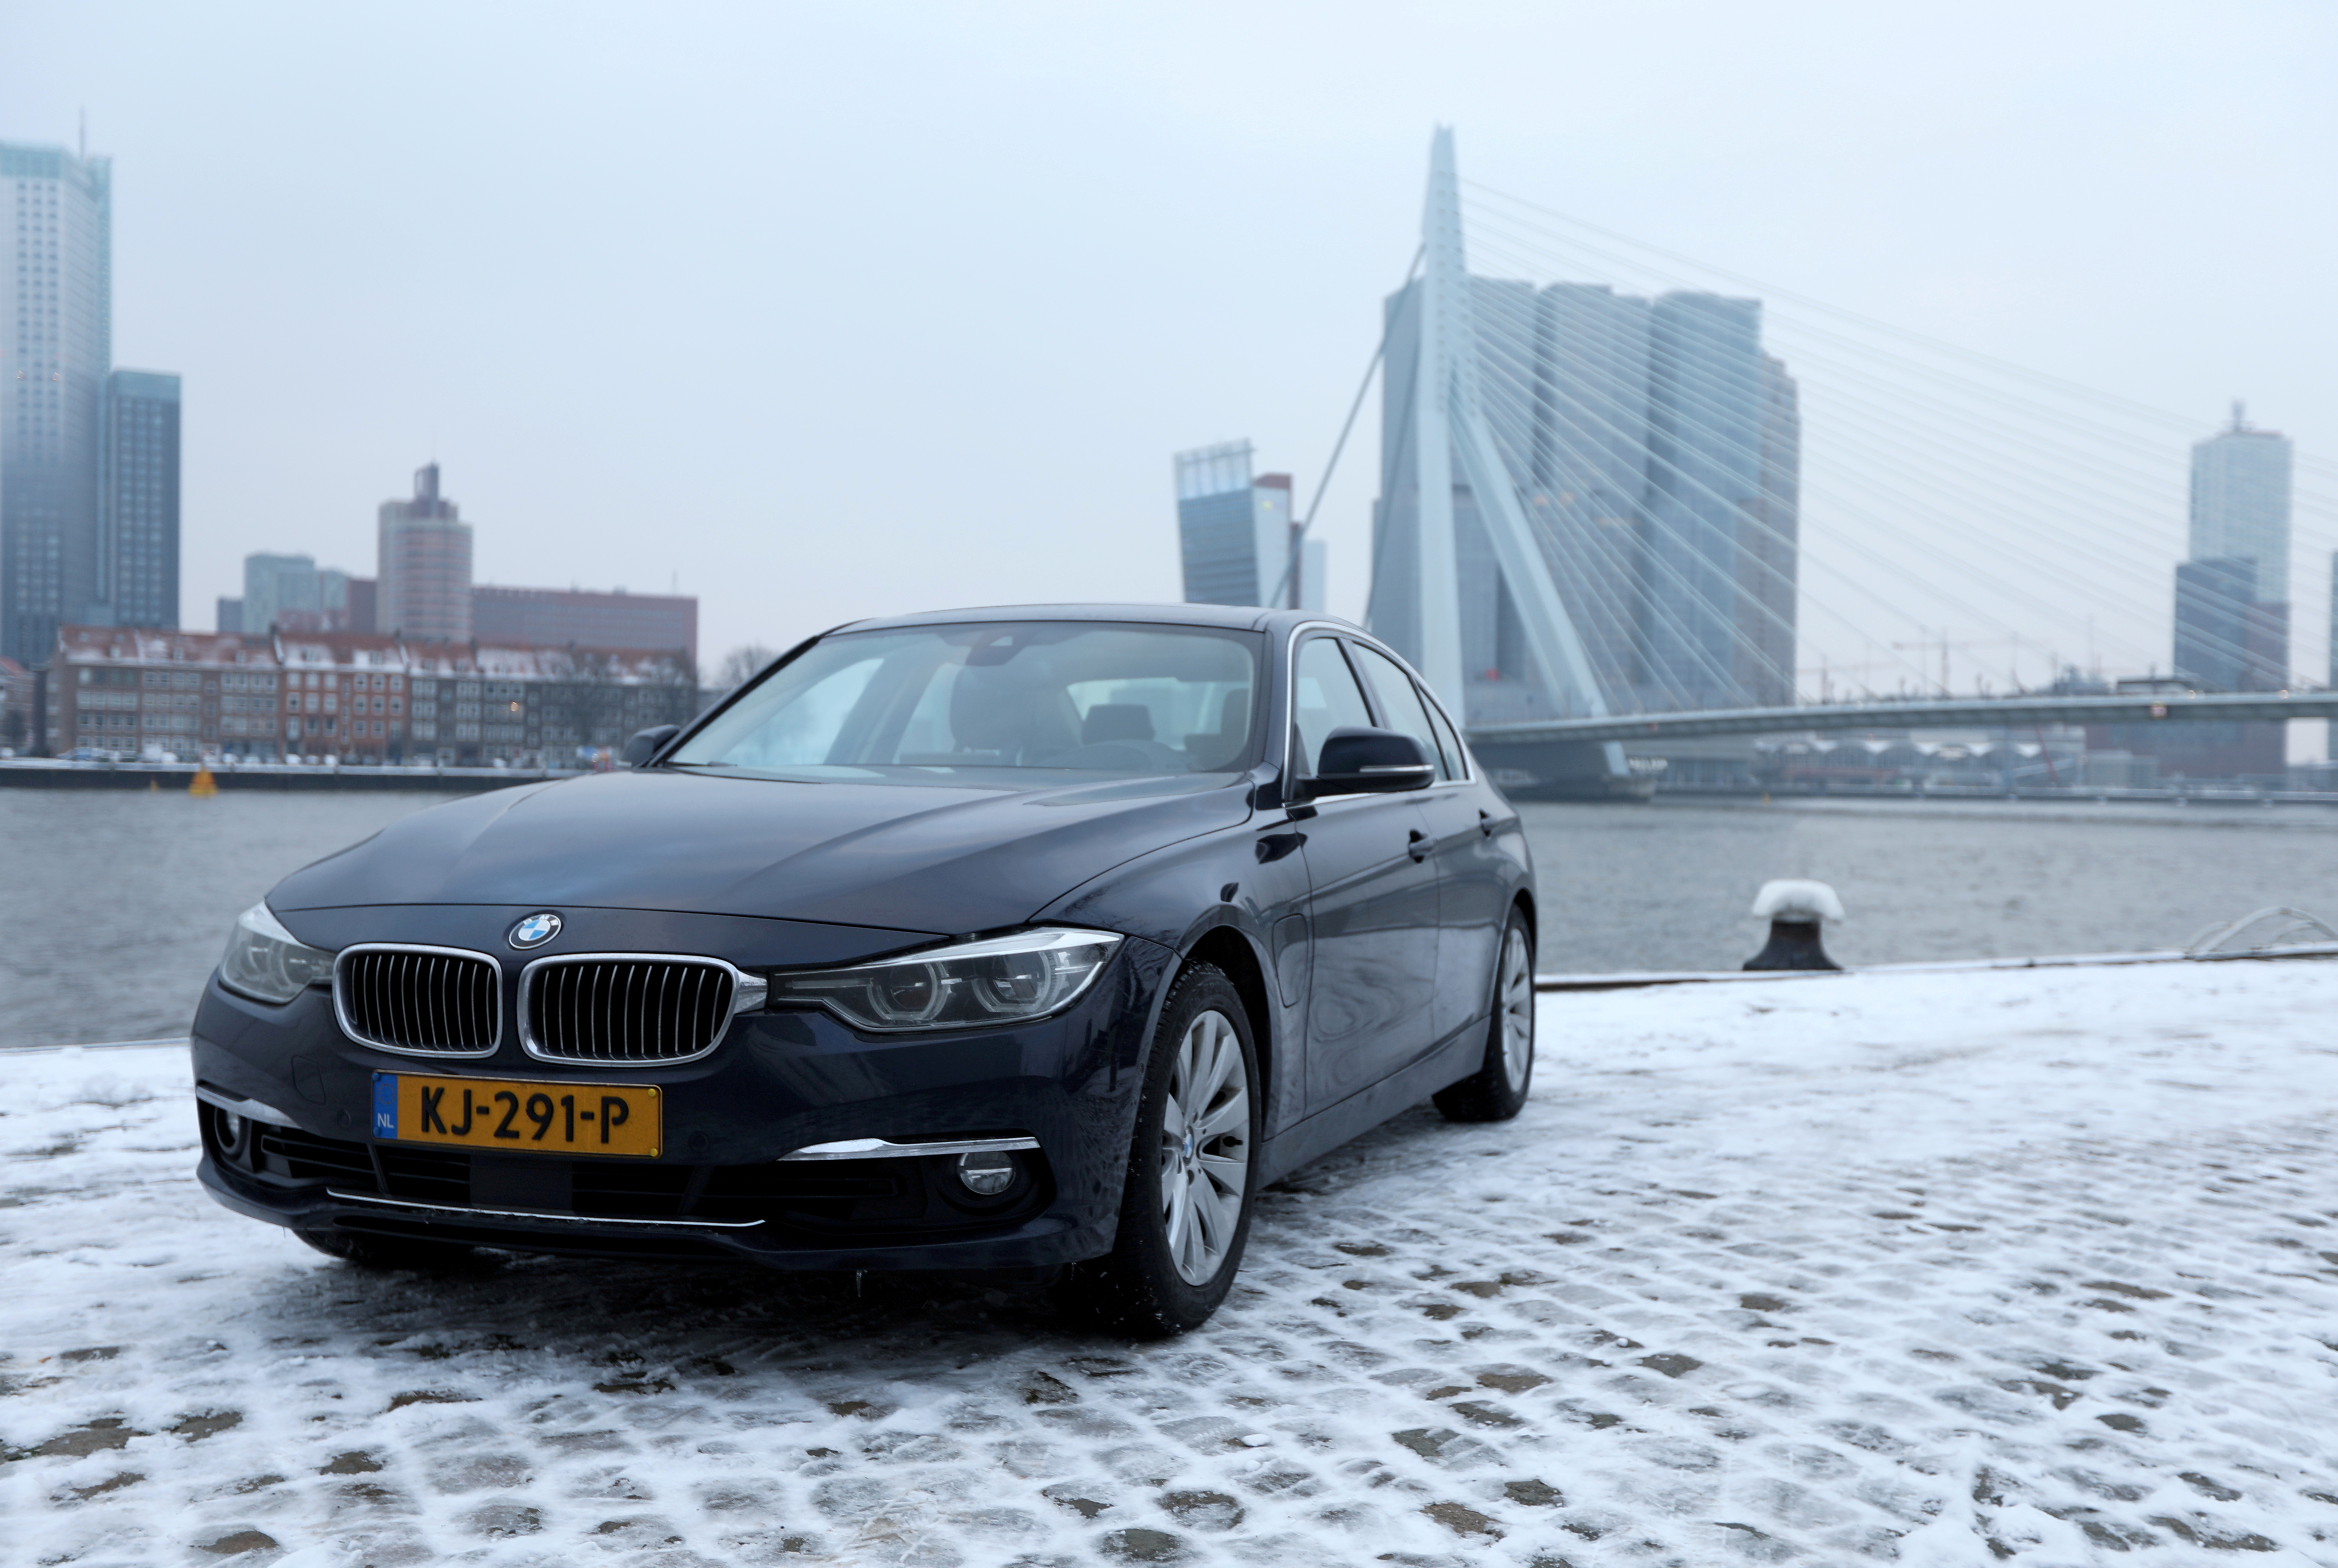 A BMW hybrid car stands near Rotterdam's Erasmus bridge